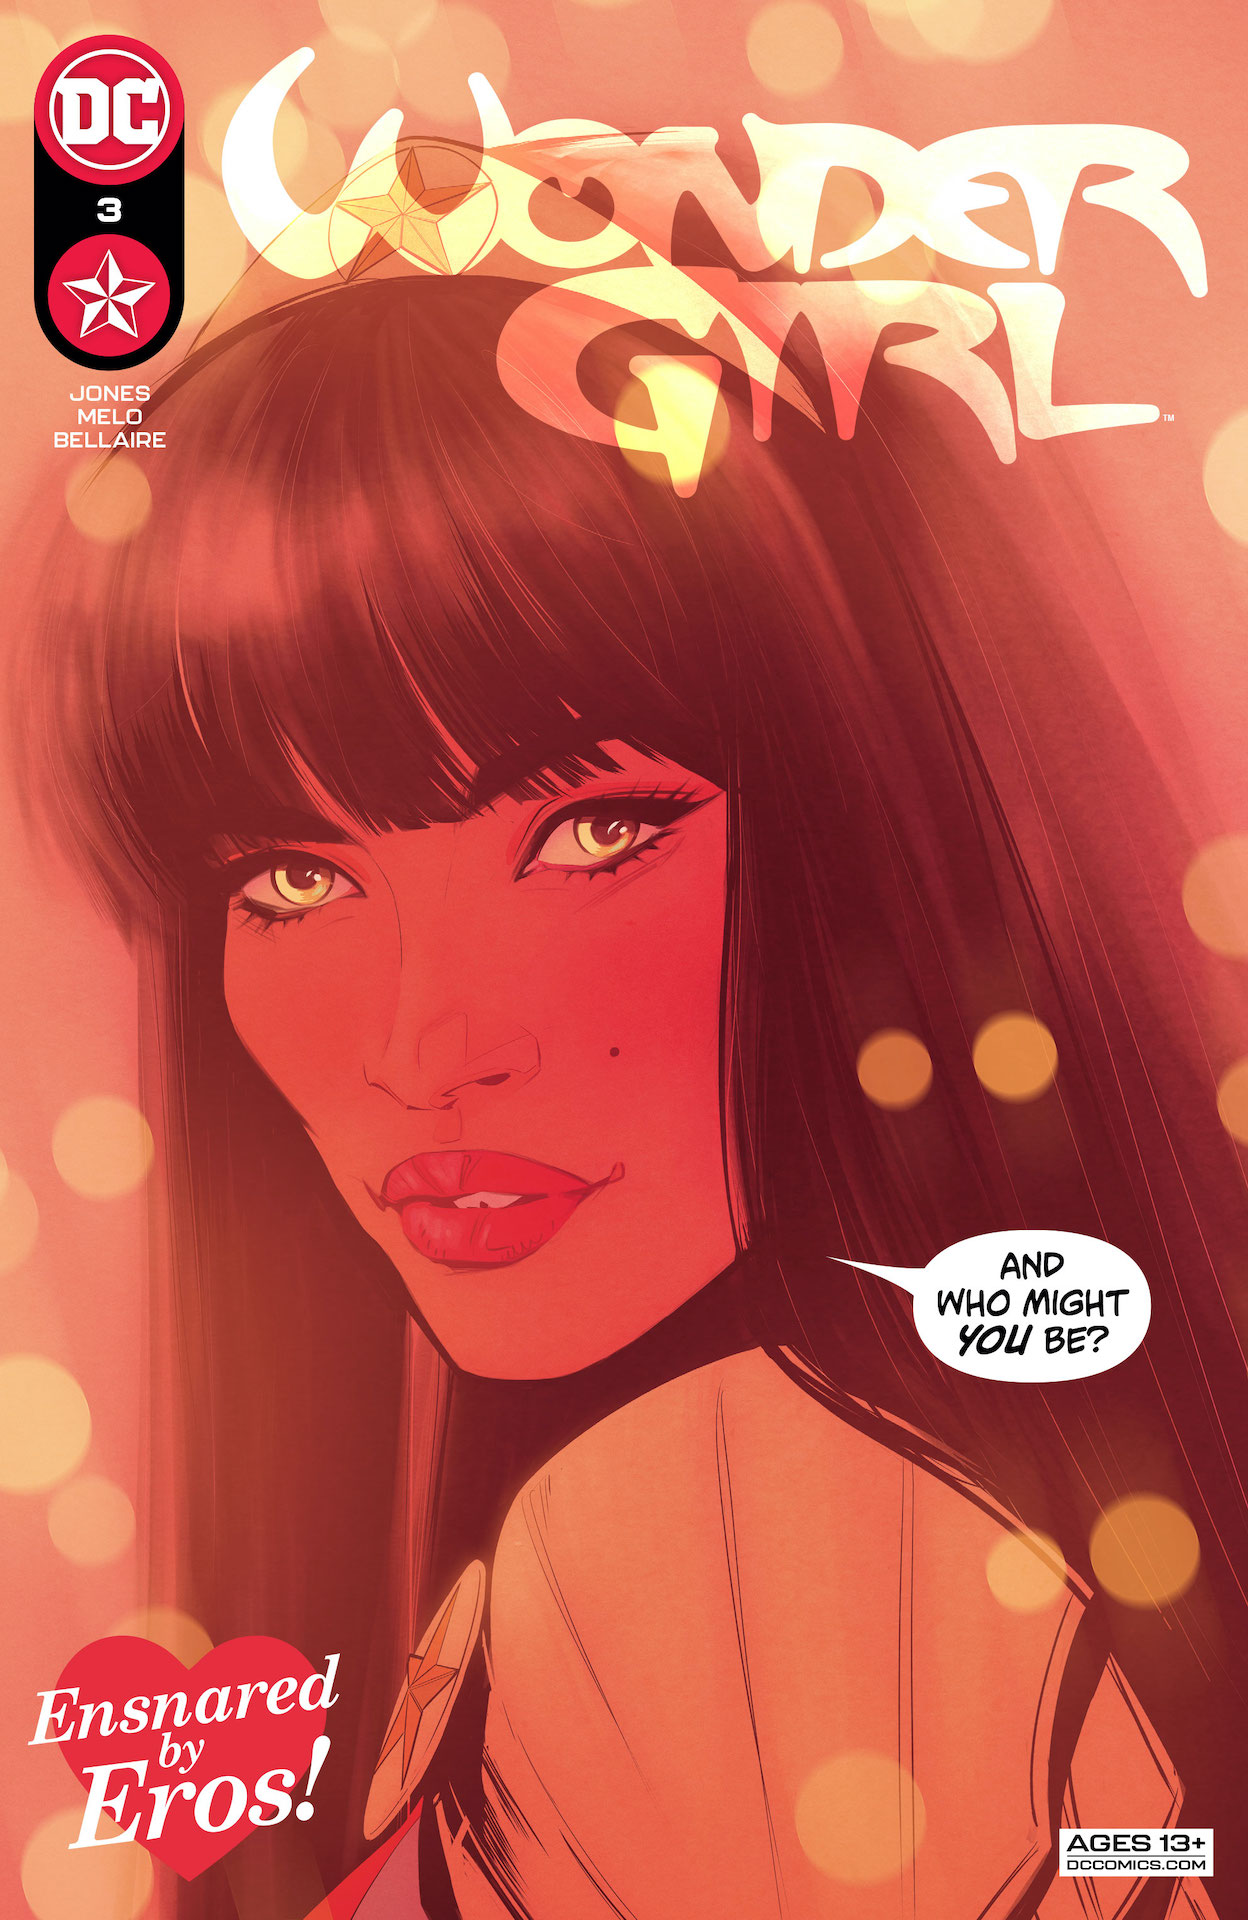 DC Preview: Wonder Girl #3